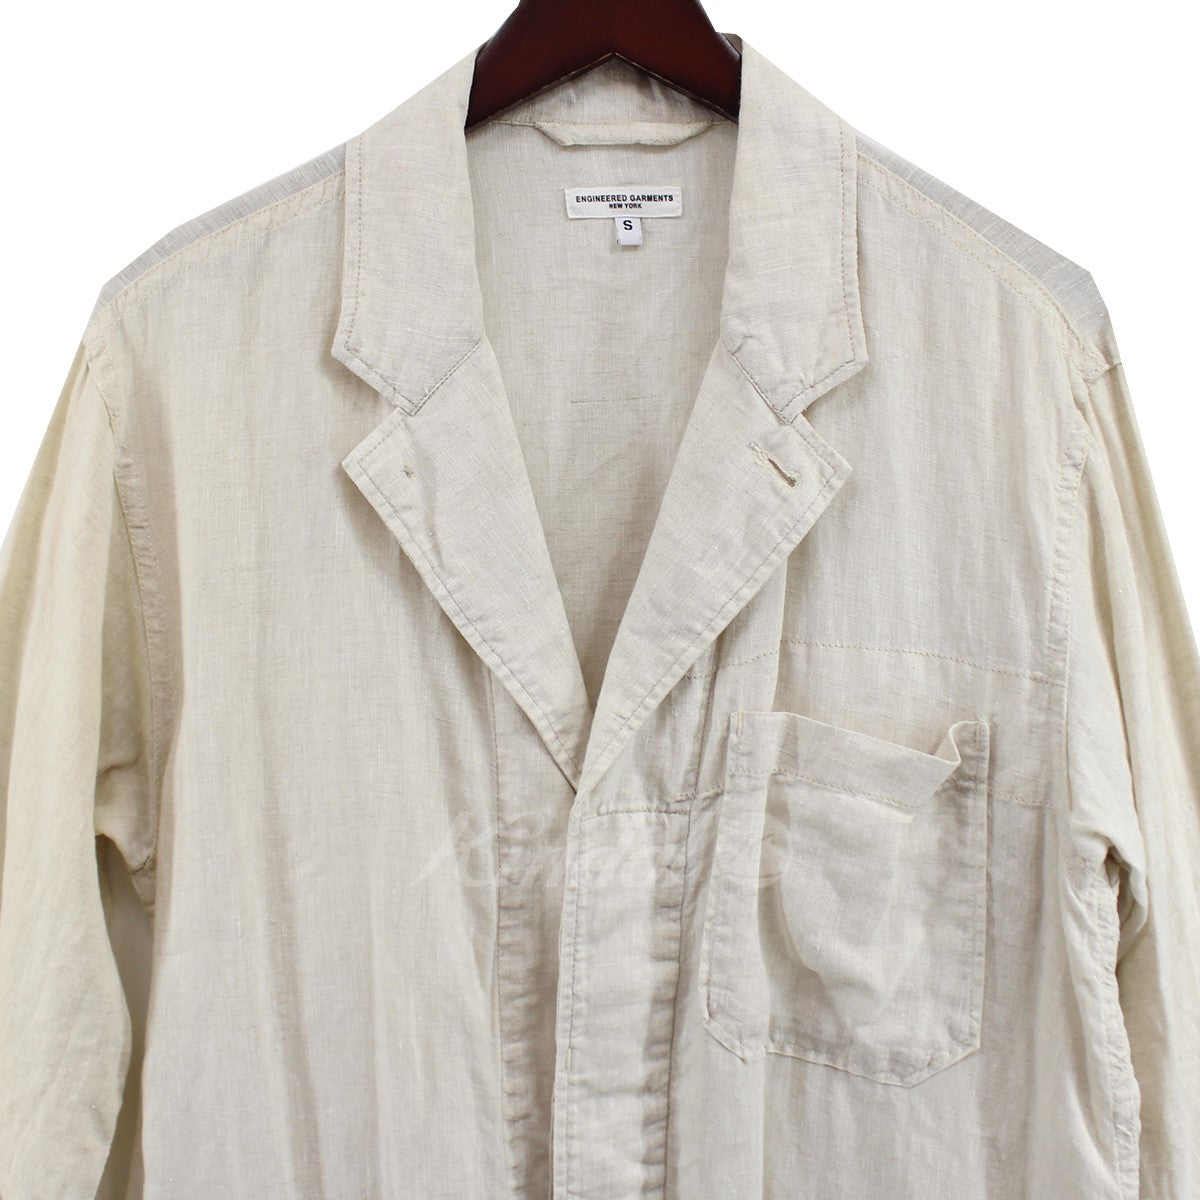 Engineered Garments(エンジニアードガーメンツ) Shop Coat Linen Handkerchief リネン ショップコート